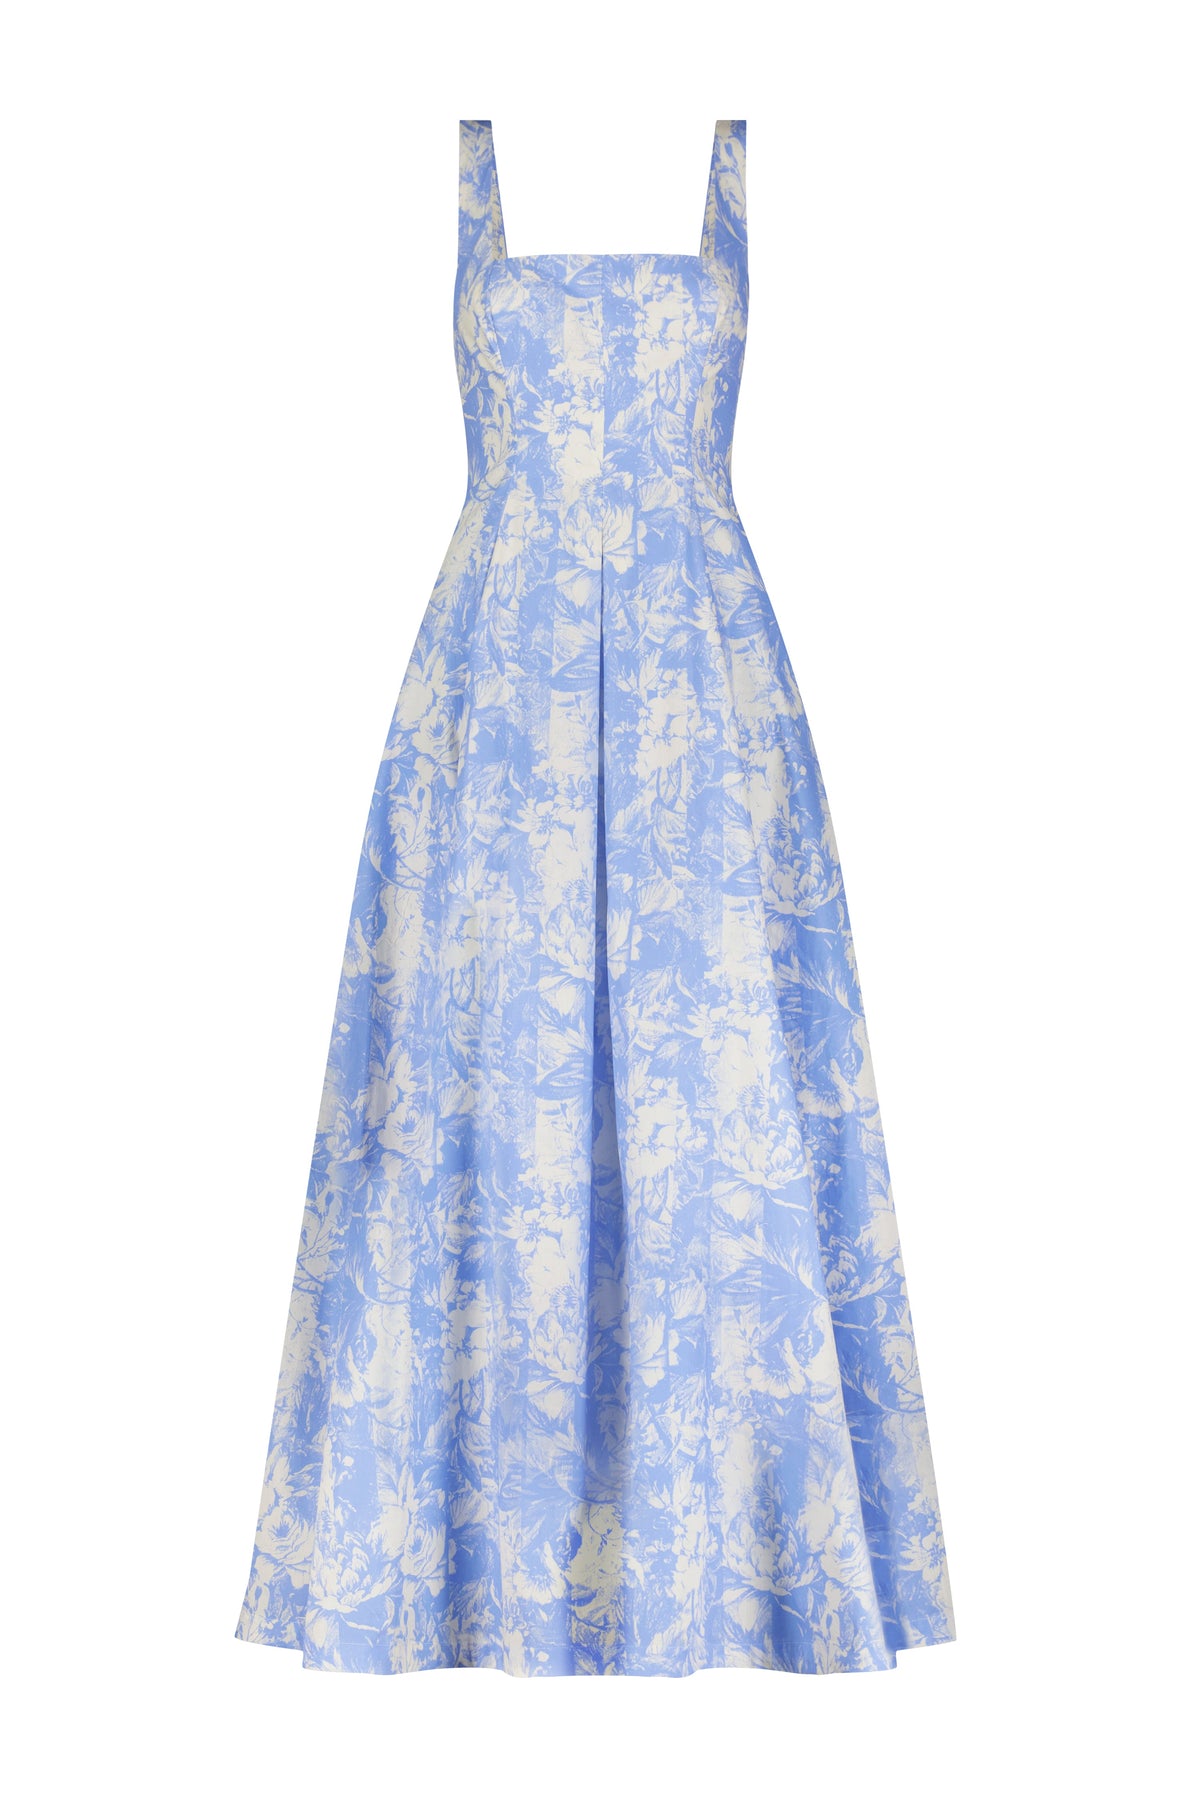 Printed Floral Poplin Stripe Square Neck Seamed Dress in Oxford & Ivory